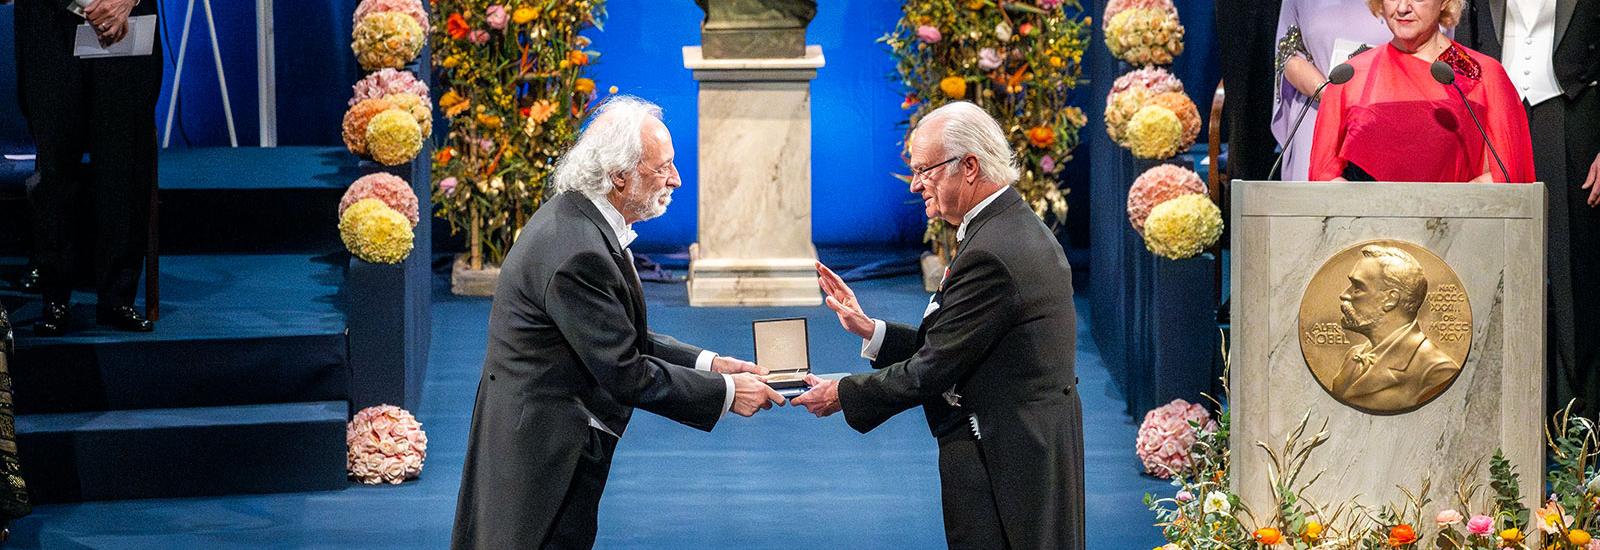 Pierre receiving the Nobel prize